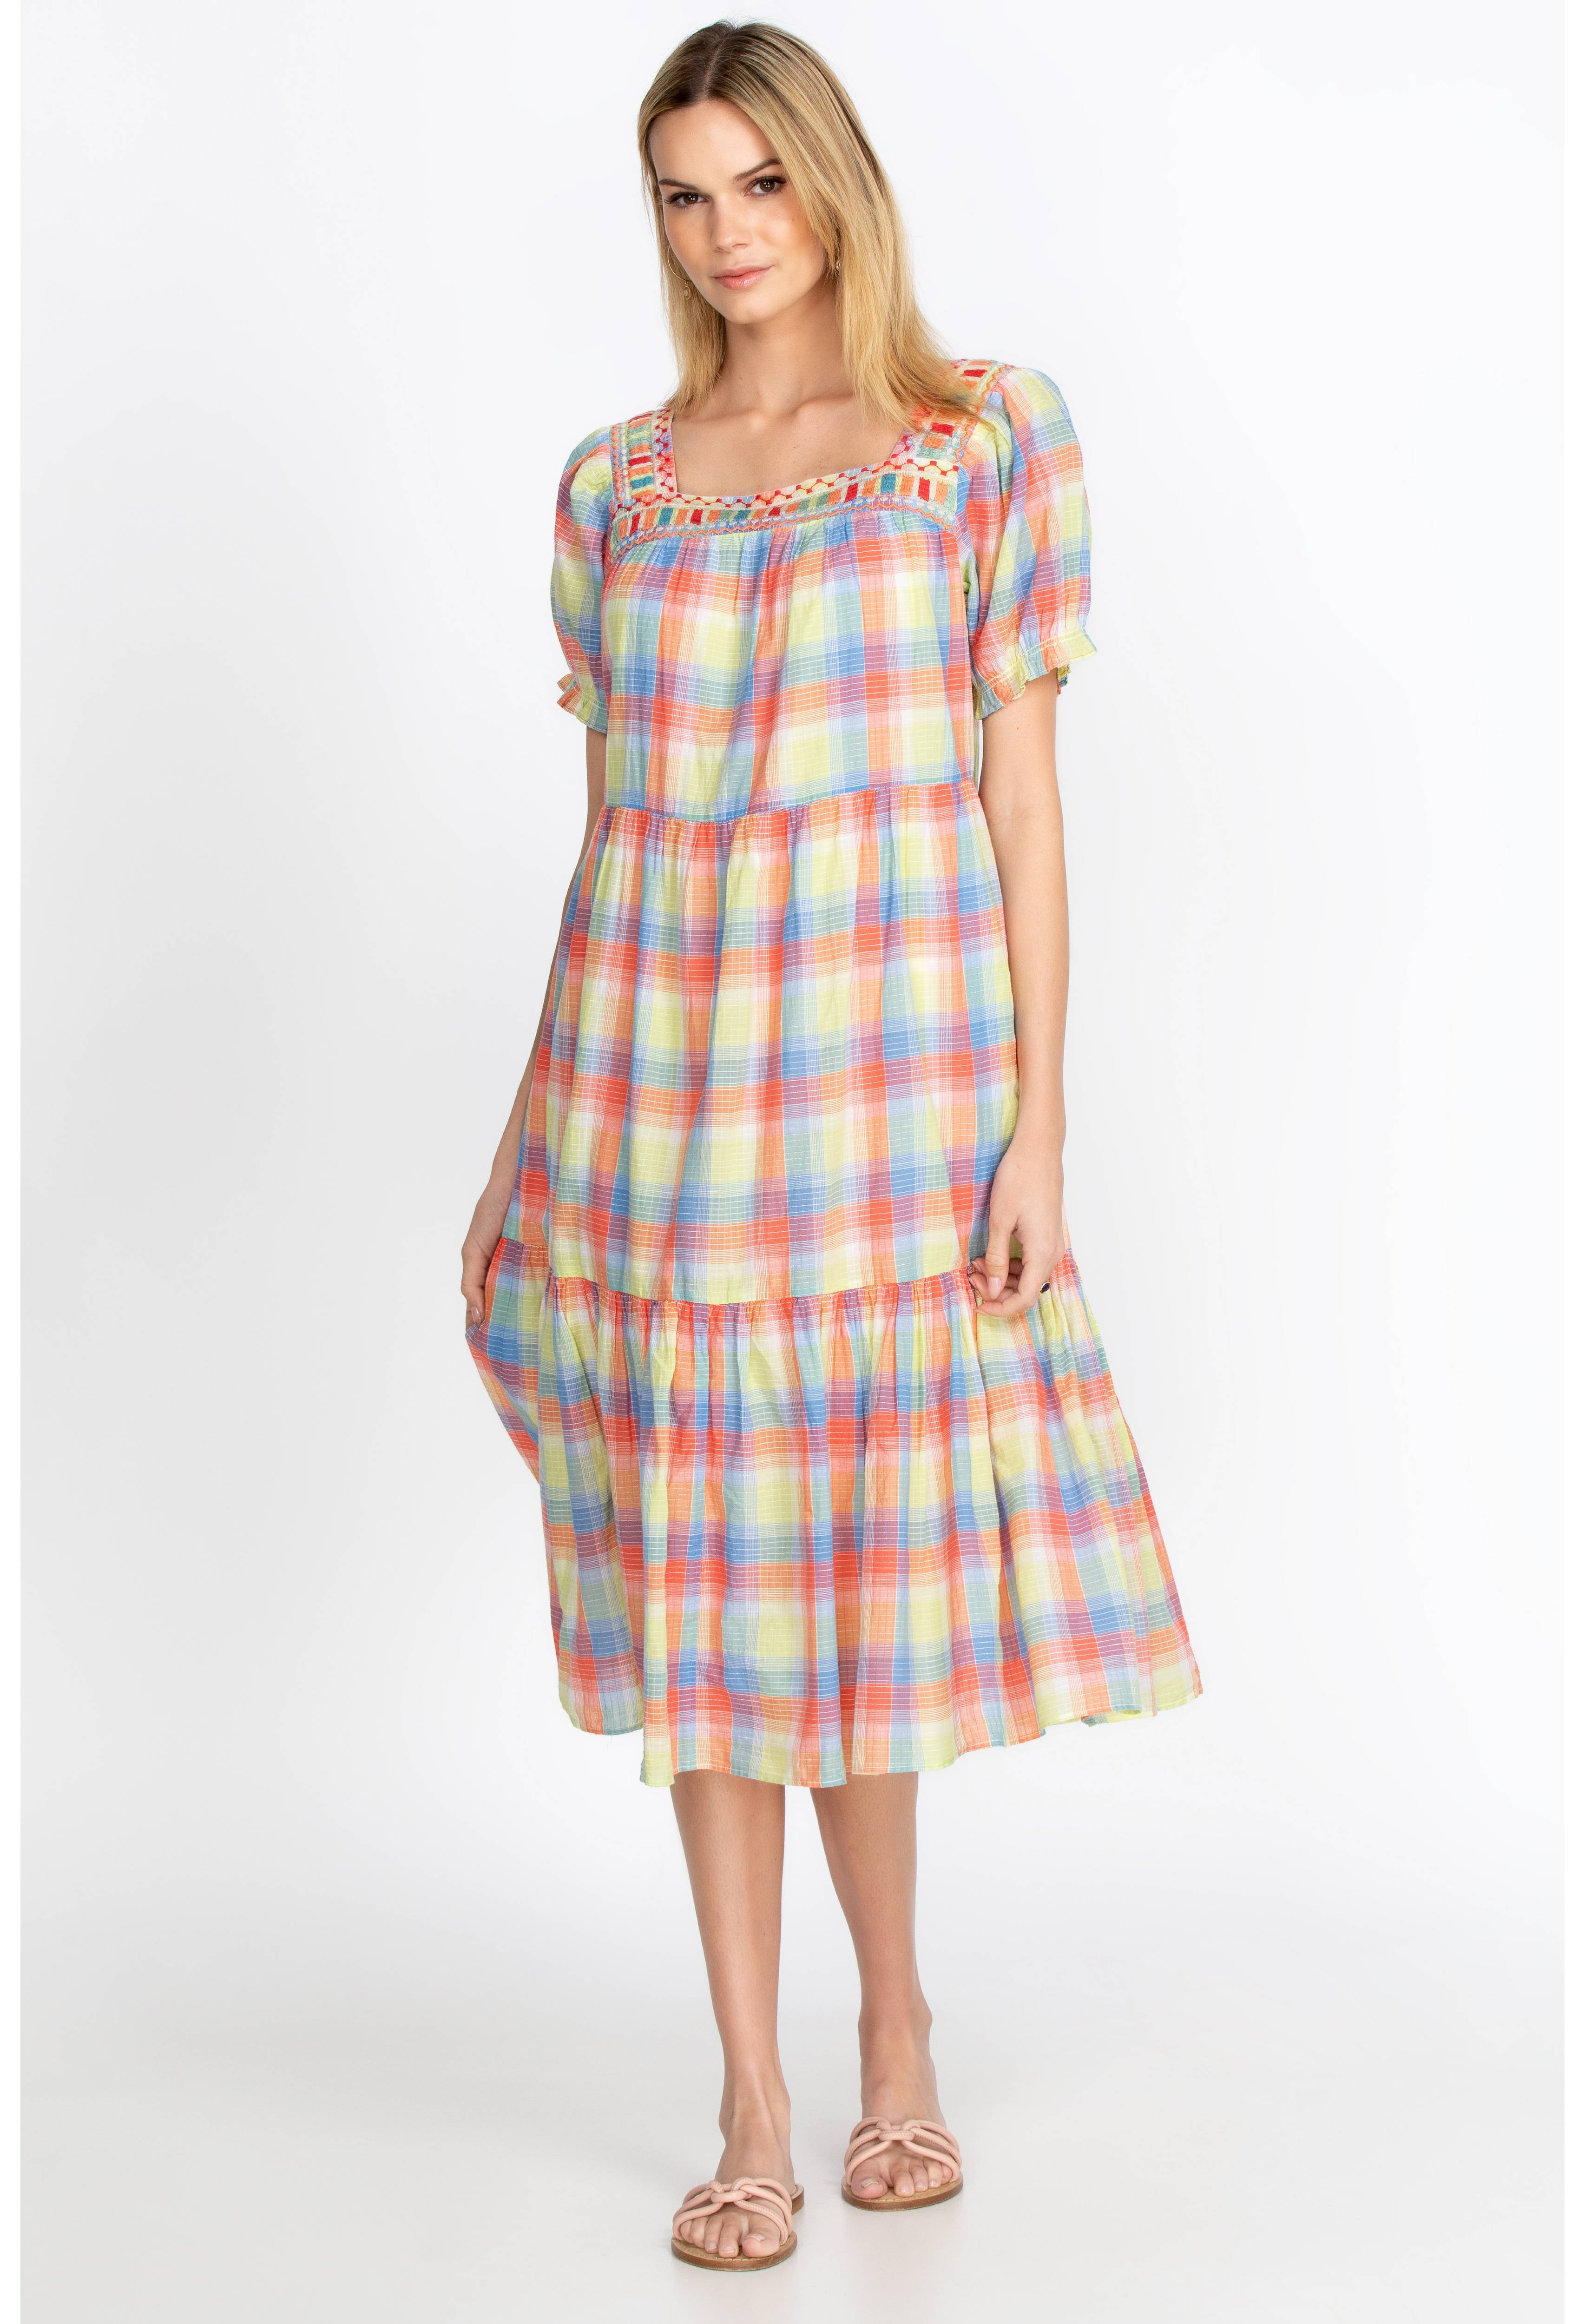 Delacey Plaid Square Neck Midi Dress, , large image number 1